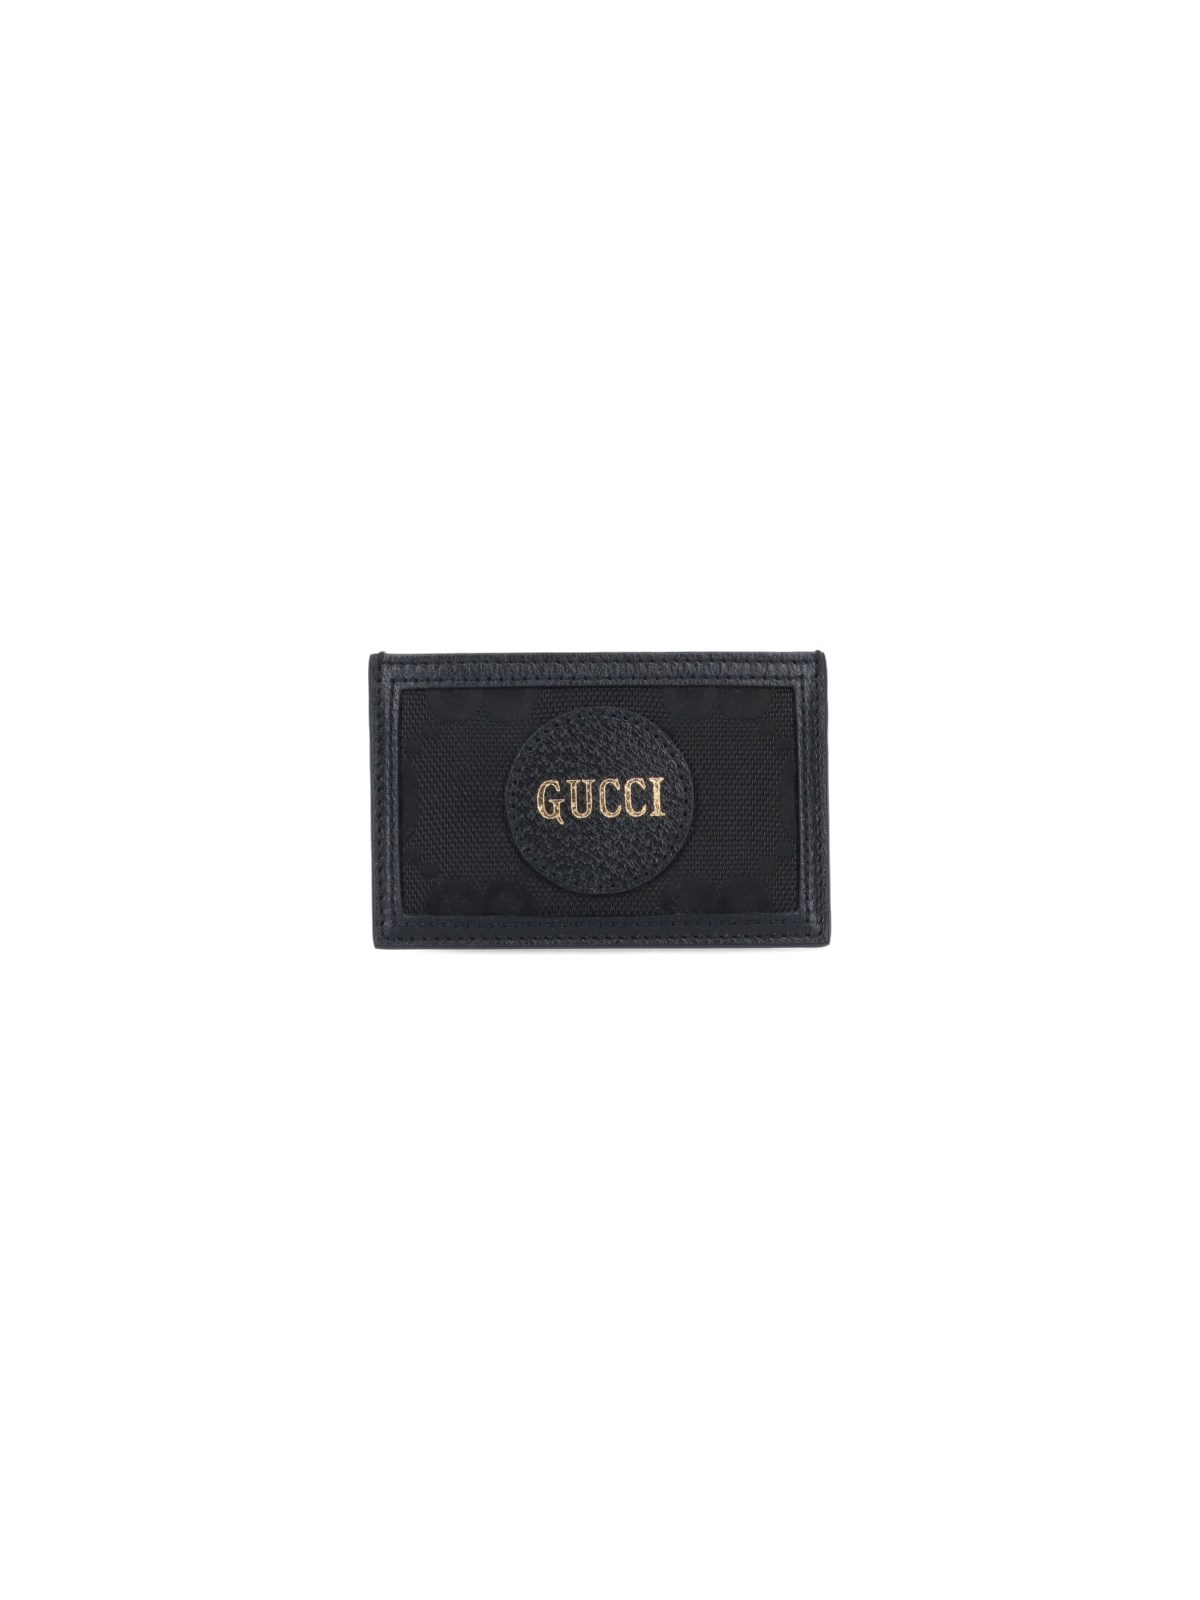 Gucci Off The Grid Card Case Black